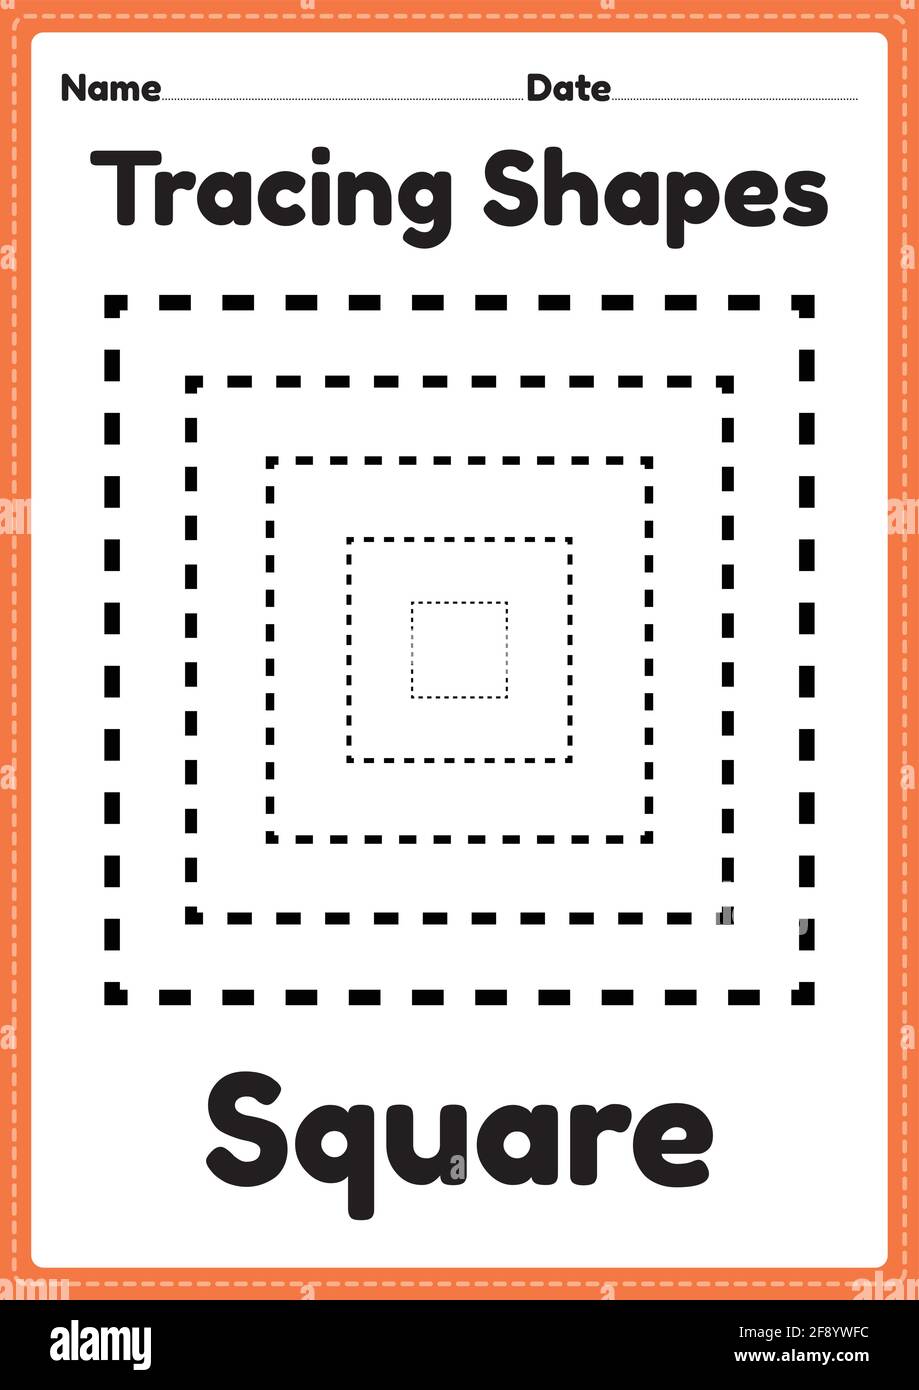 tracing-square-shapes-worksheet-for-kindergarten-and-preschool-kids-for